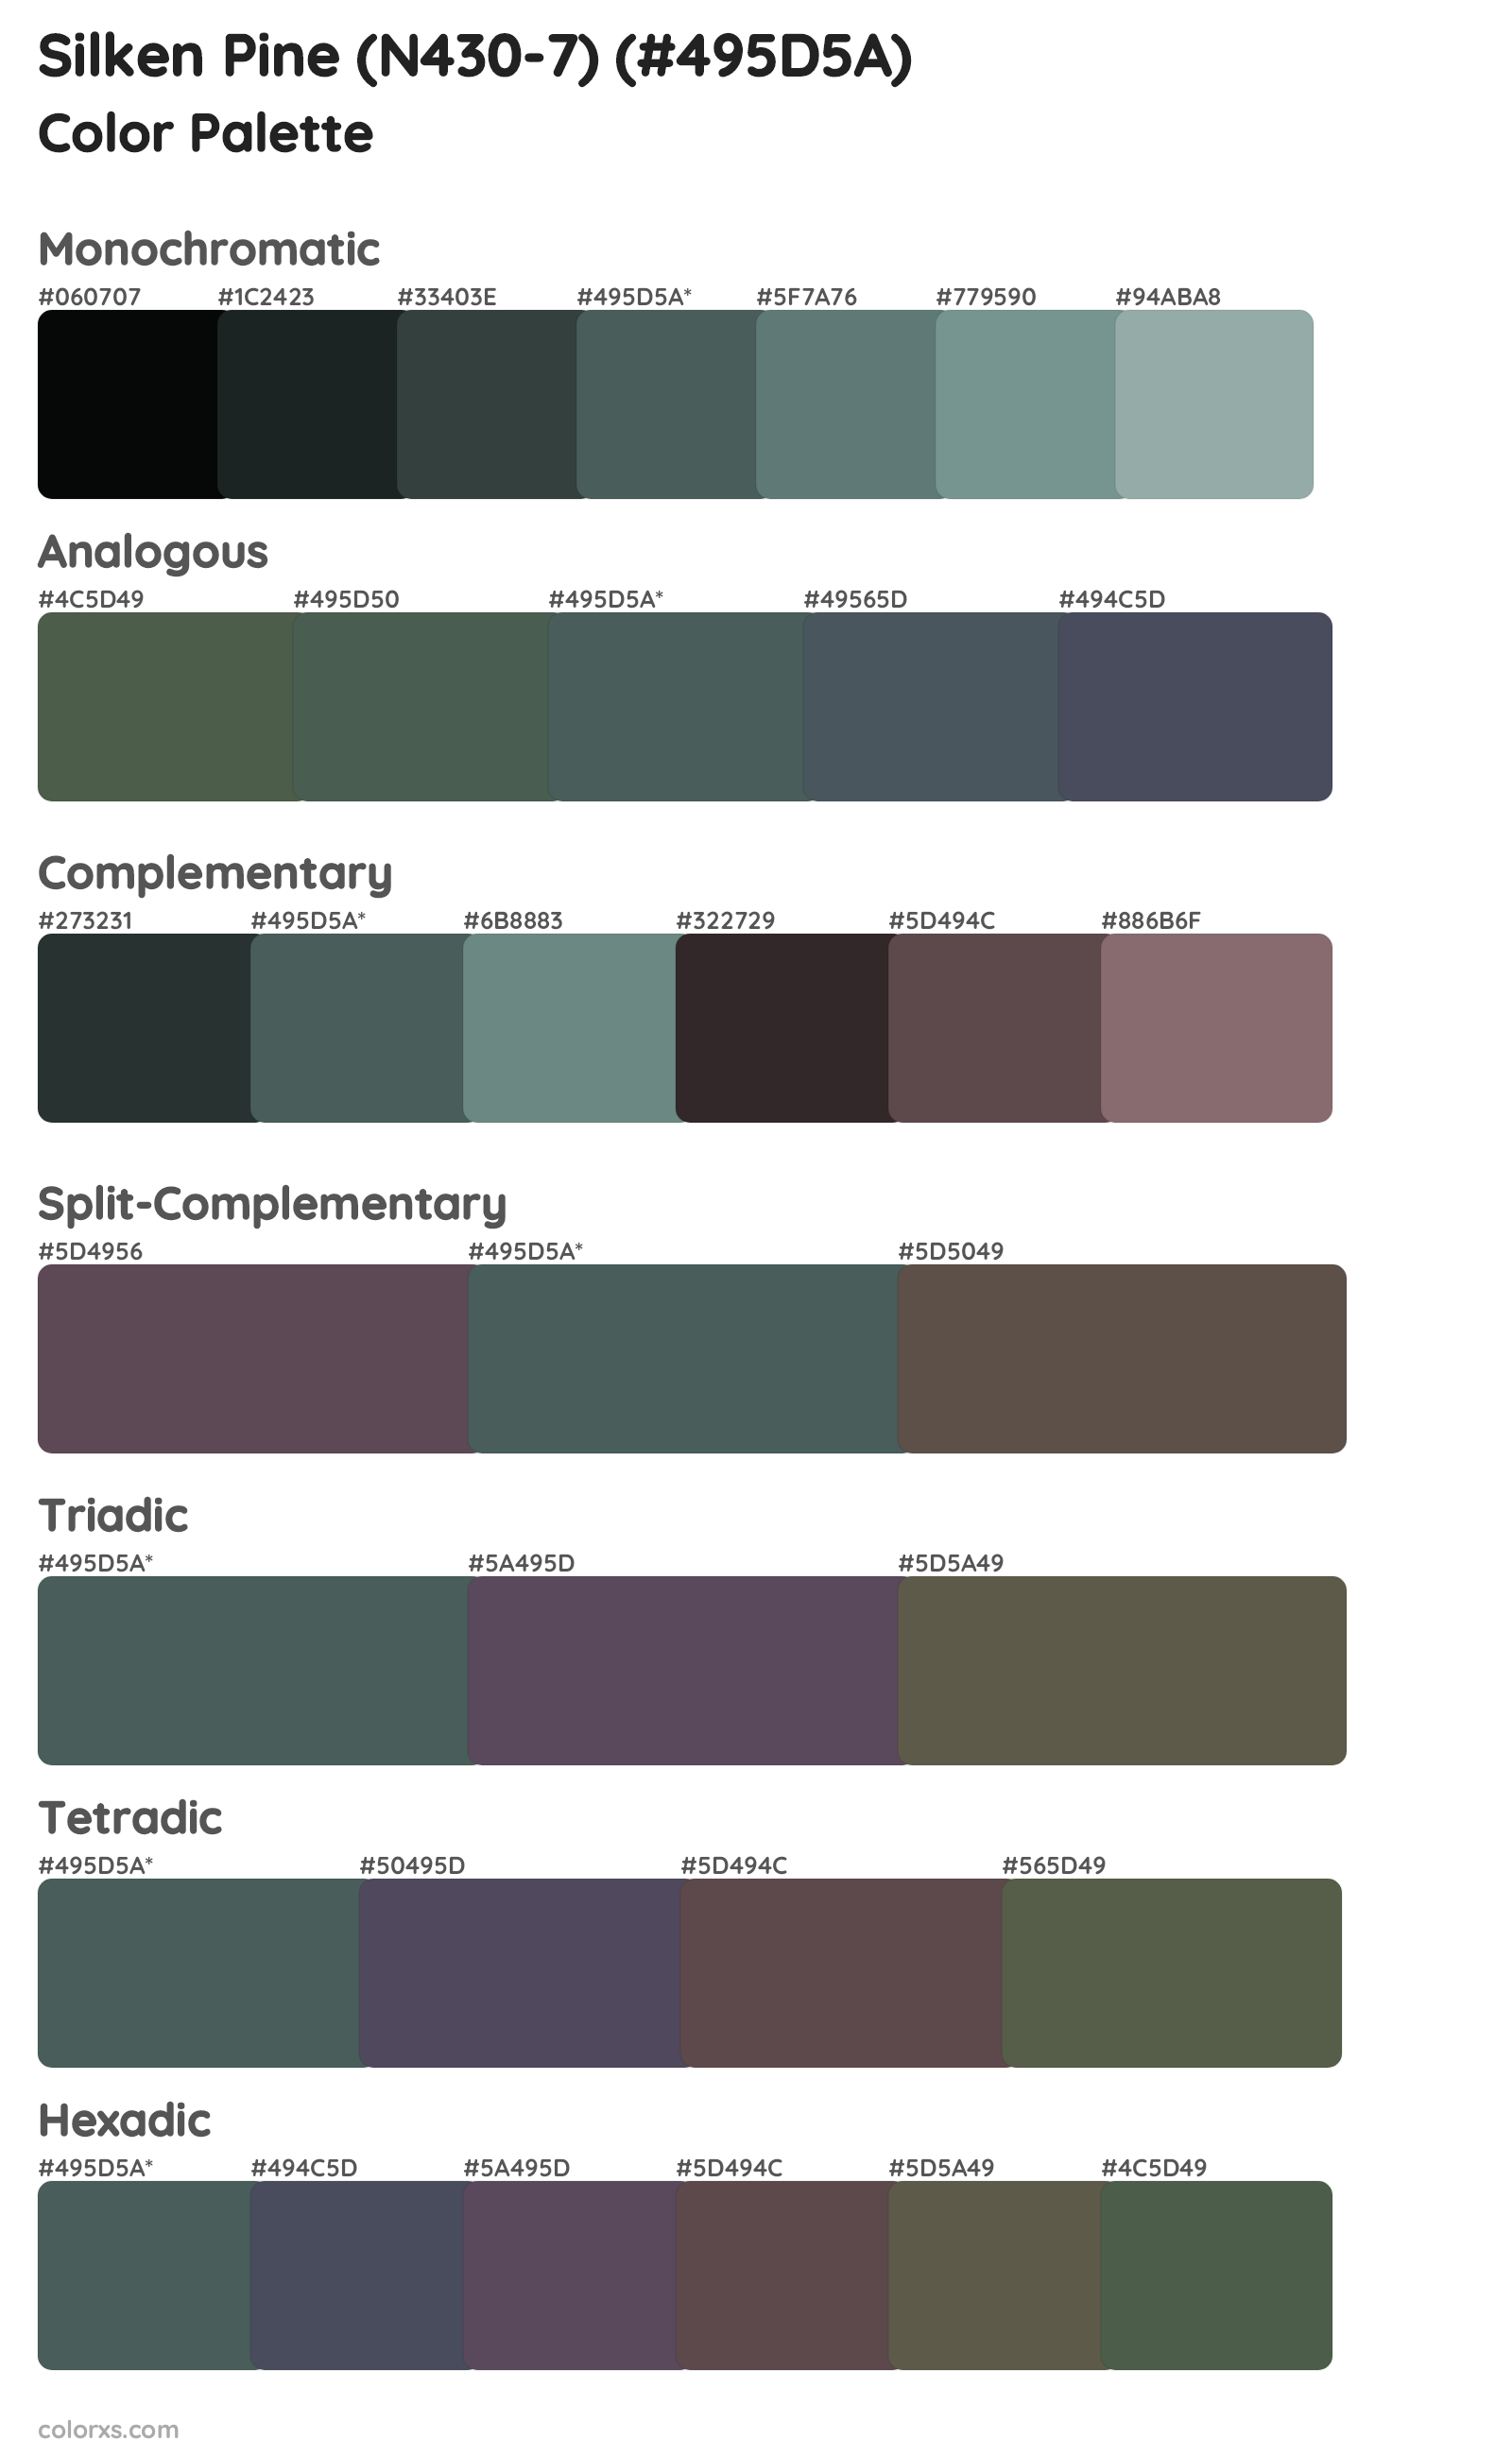 Silken Pine (N430-7) Color Scheme Palettes